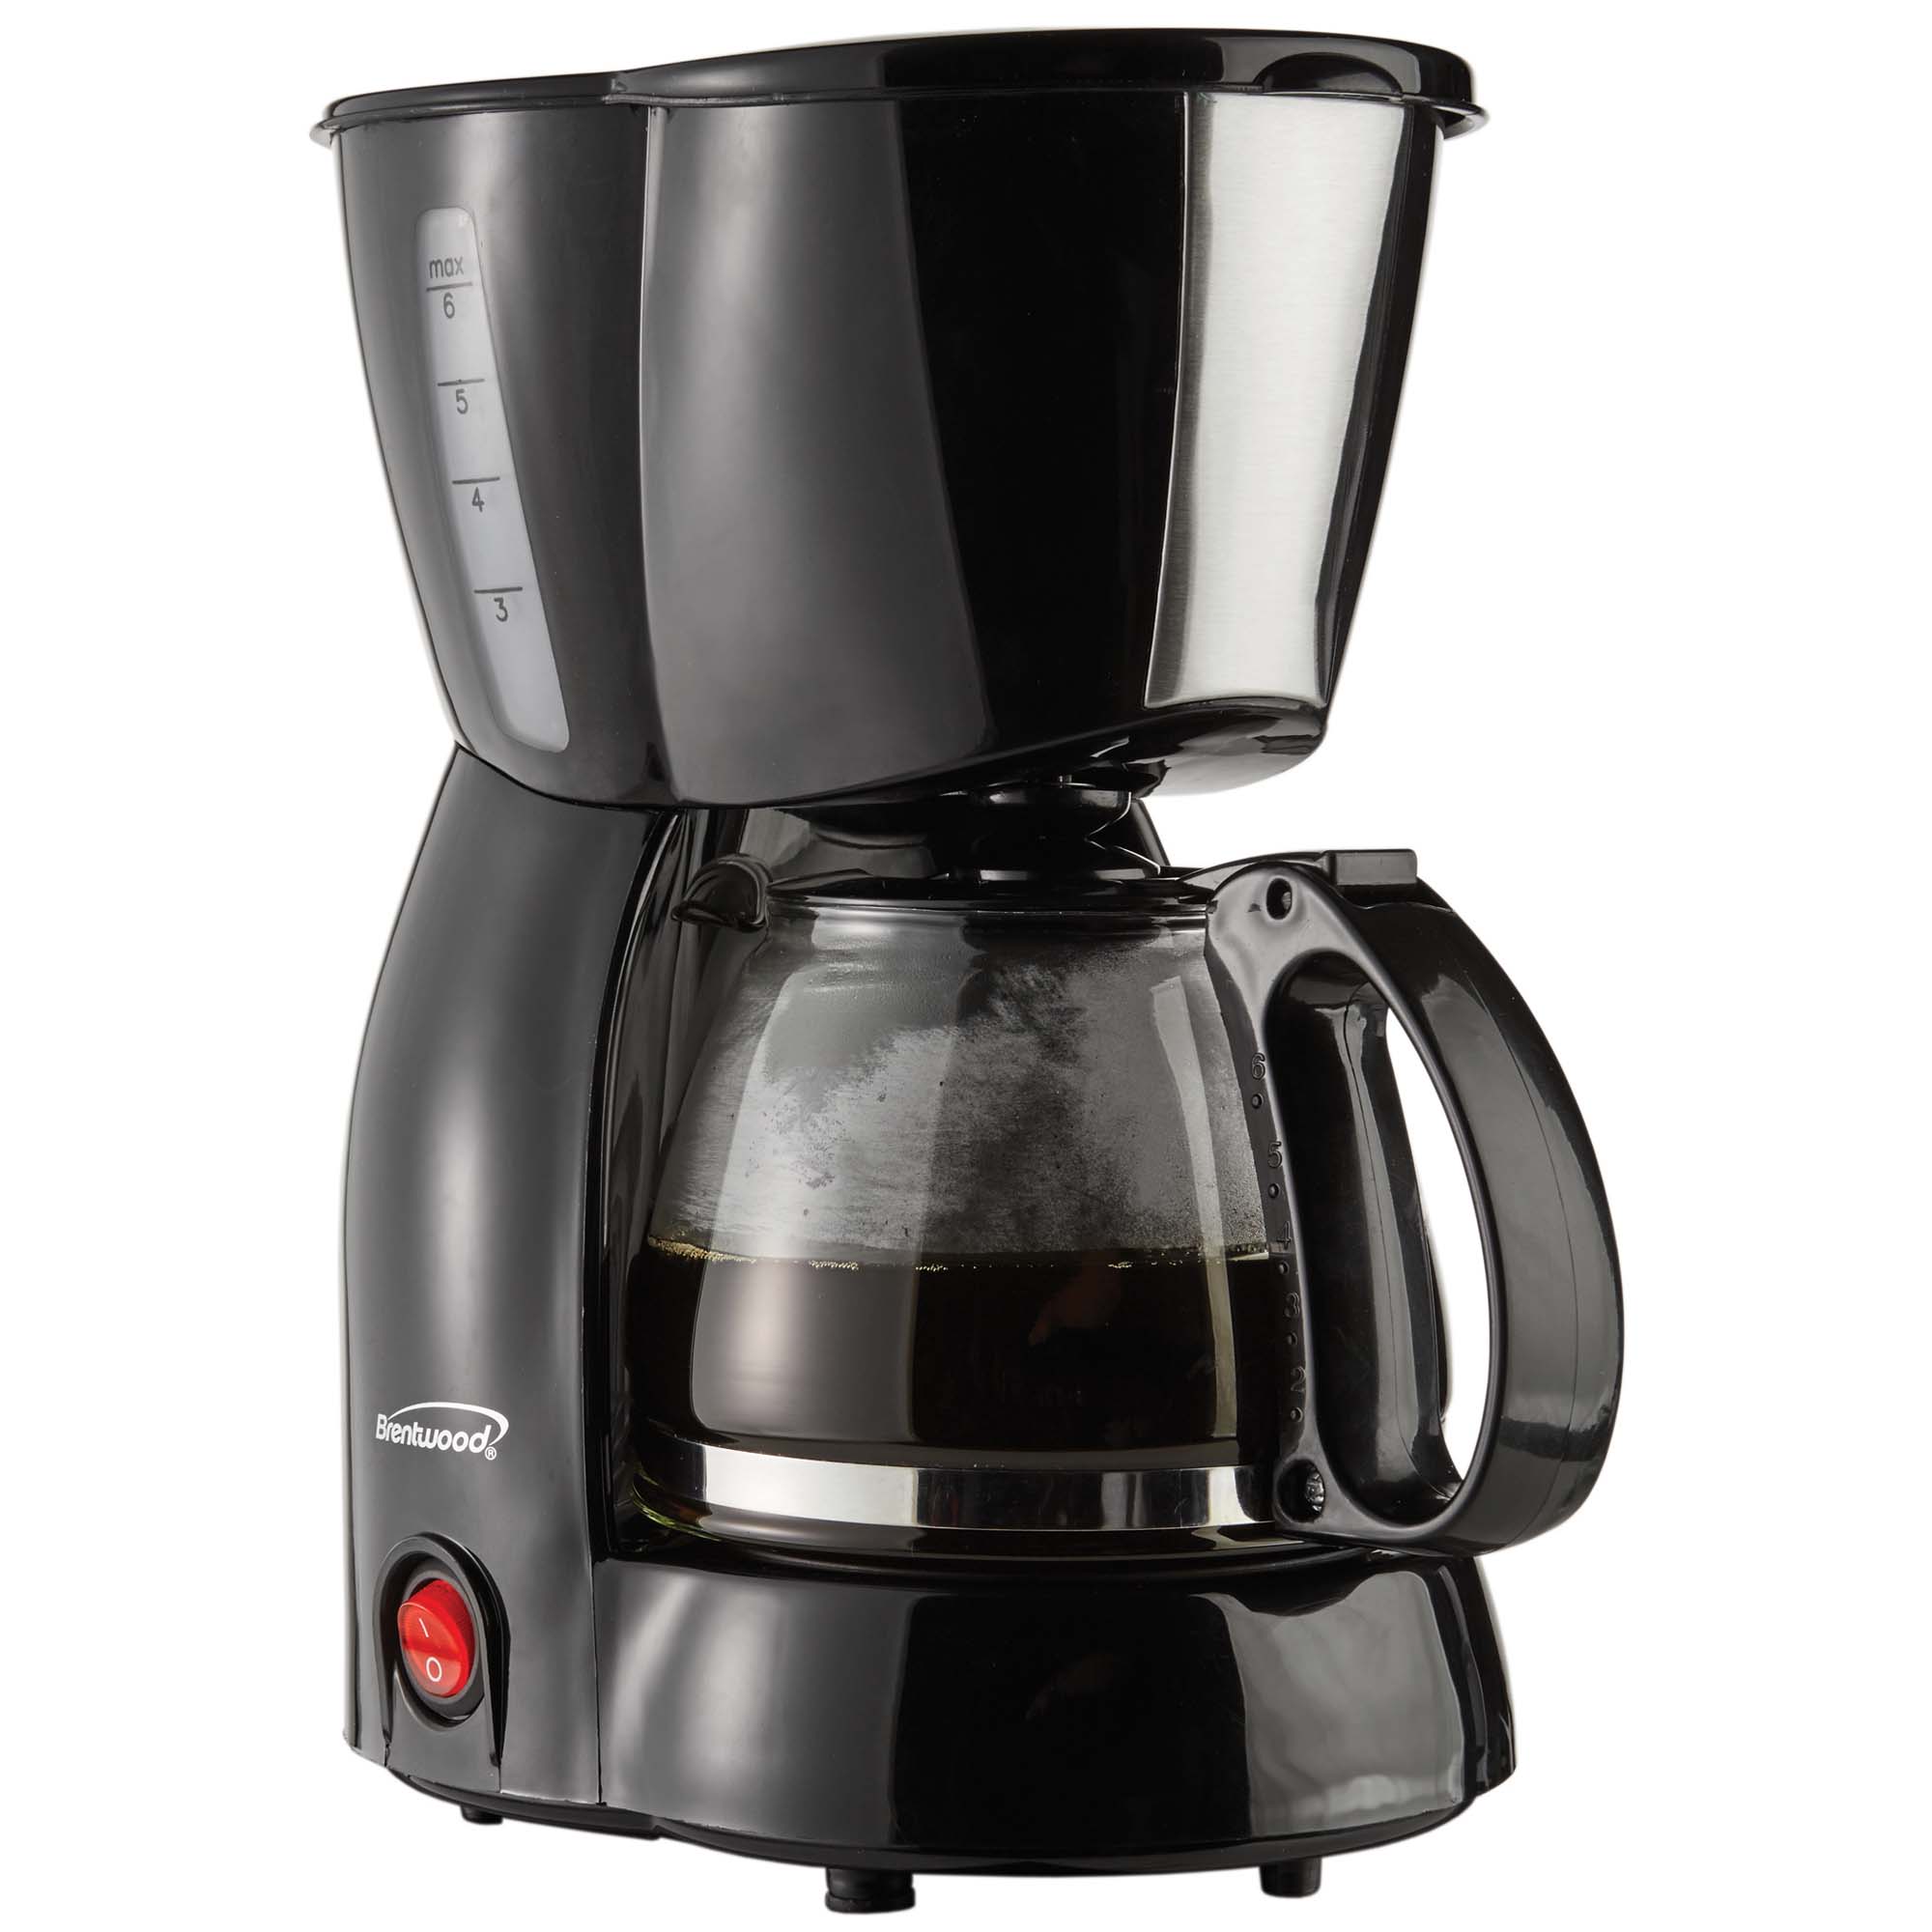 TS-213BK 4 Cup Coffee Maker Black